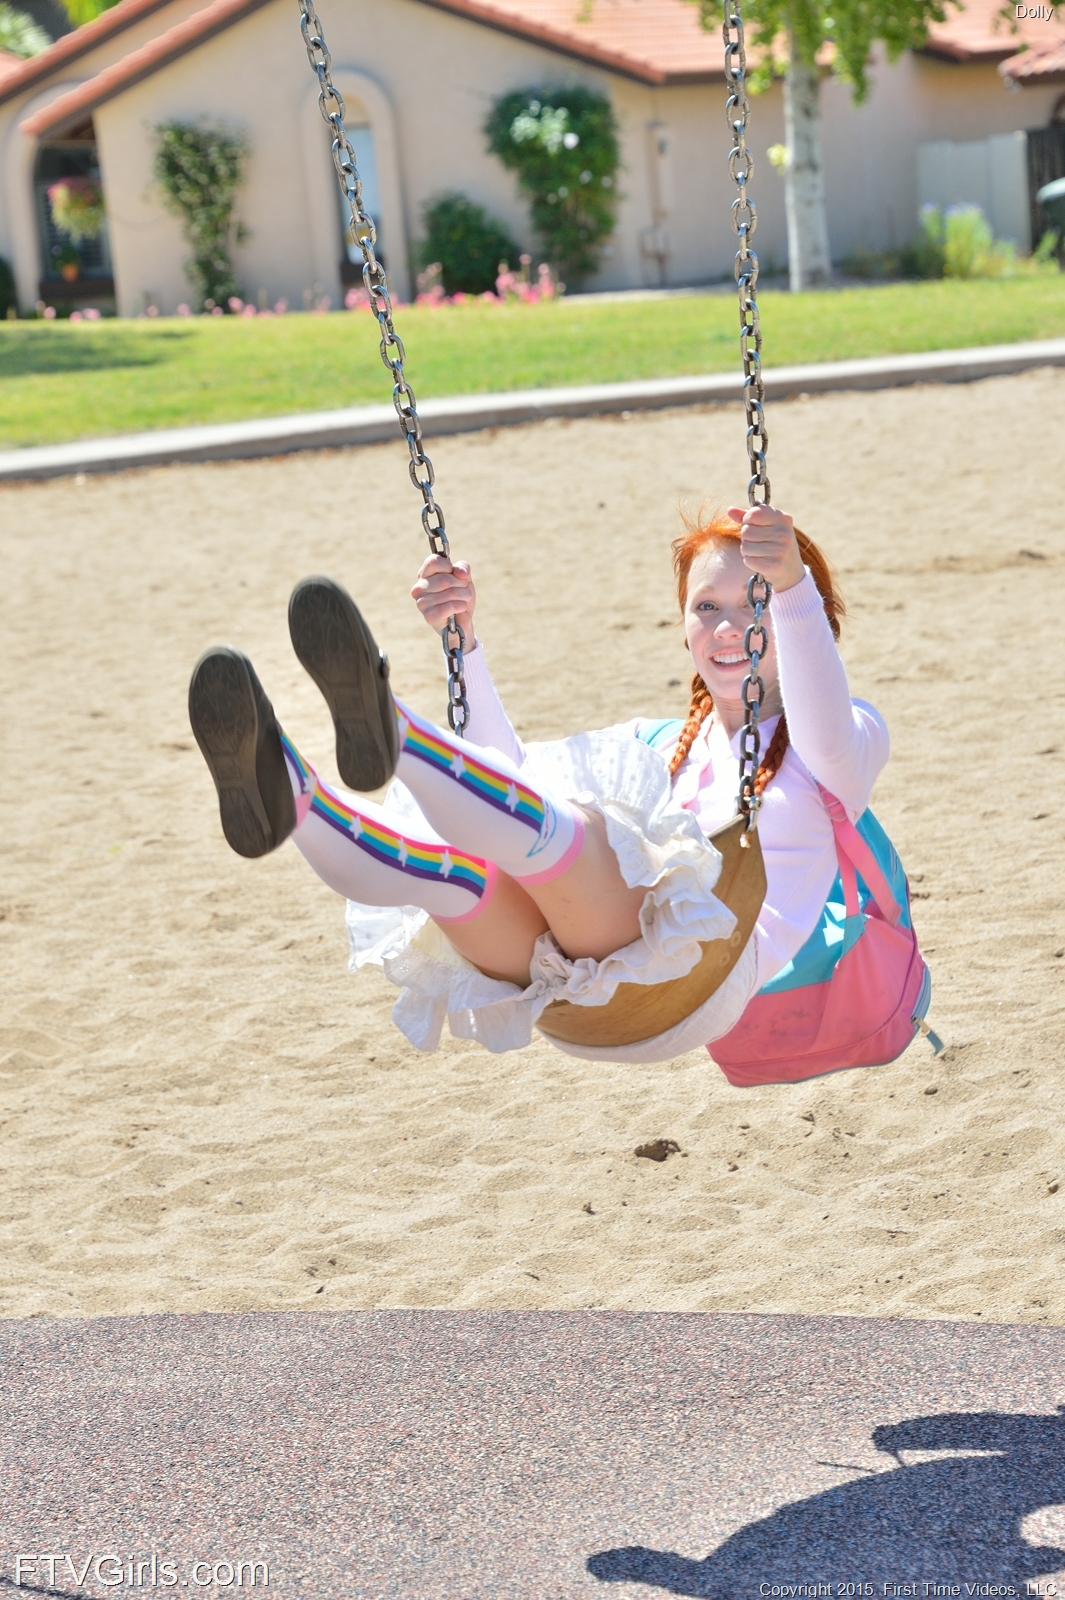 dolly-playground-redhead-pigtails-ftvgirls-06